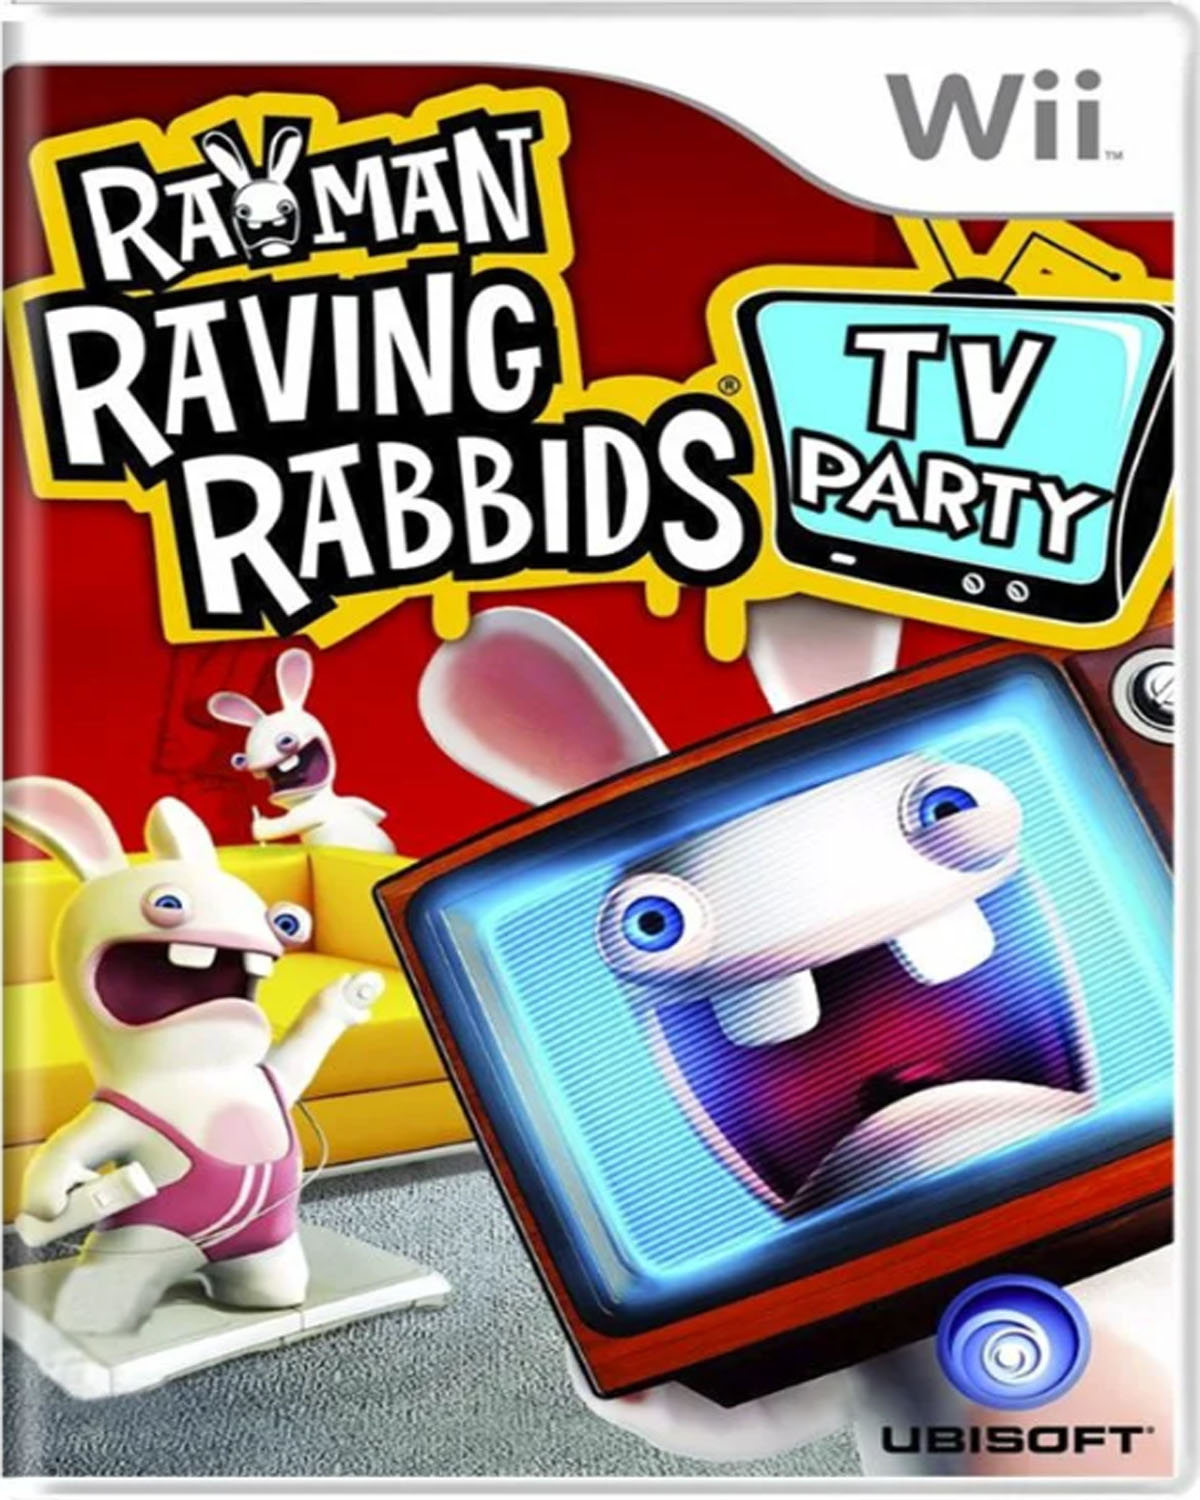 Rayman Raving Rabbids TV Party - Nintendo Wii Mídia Física